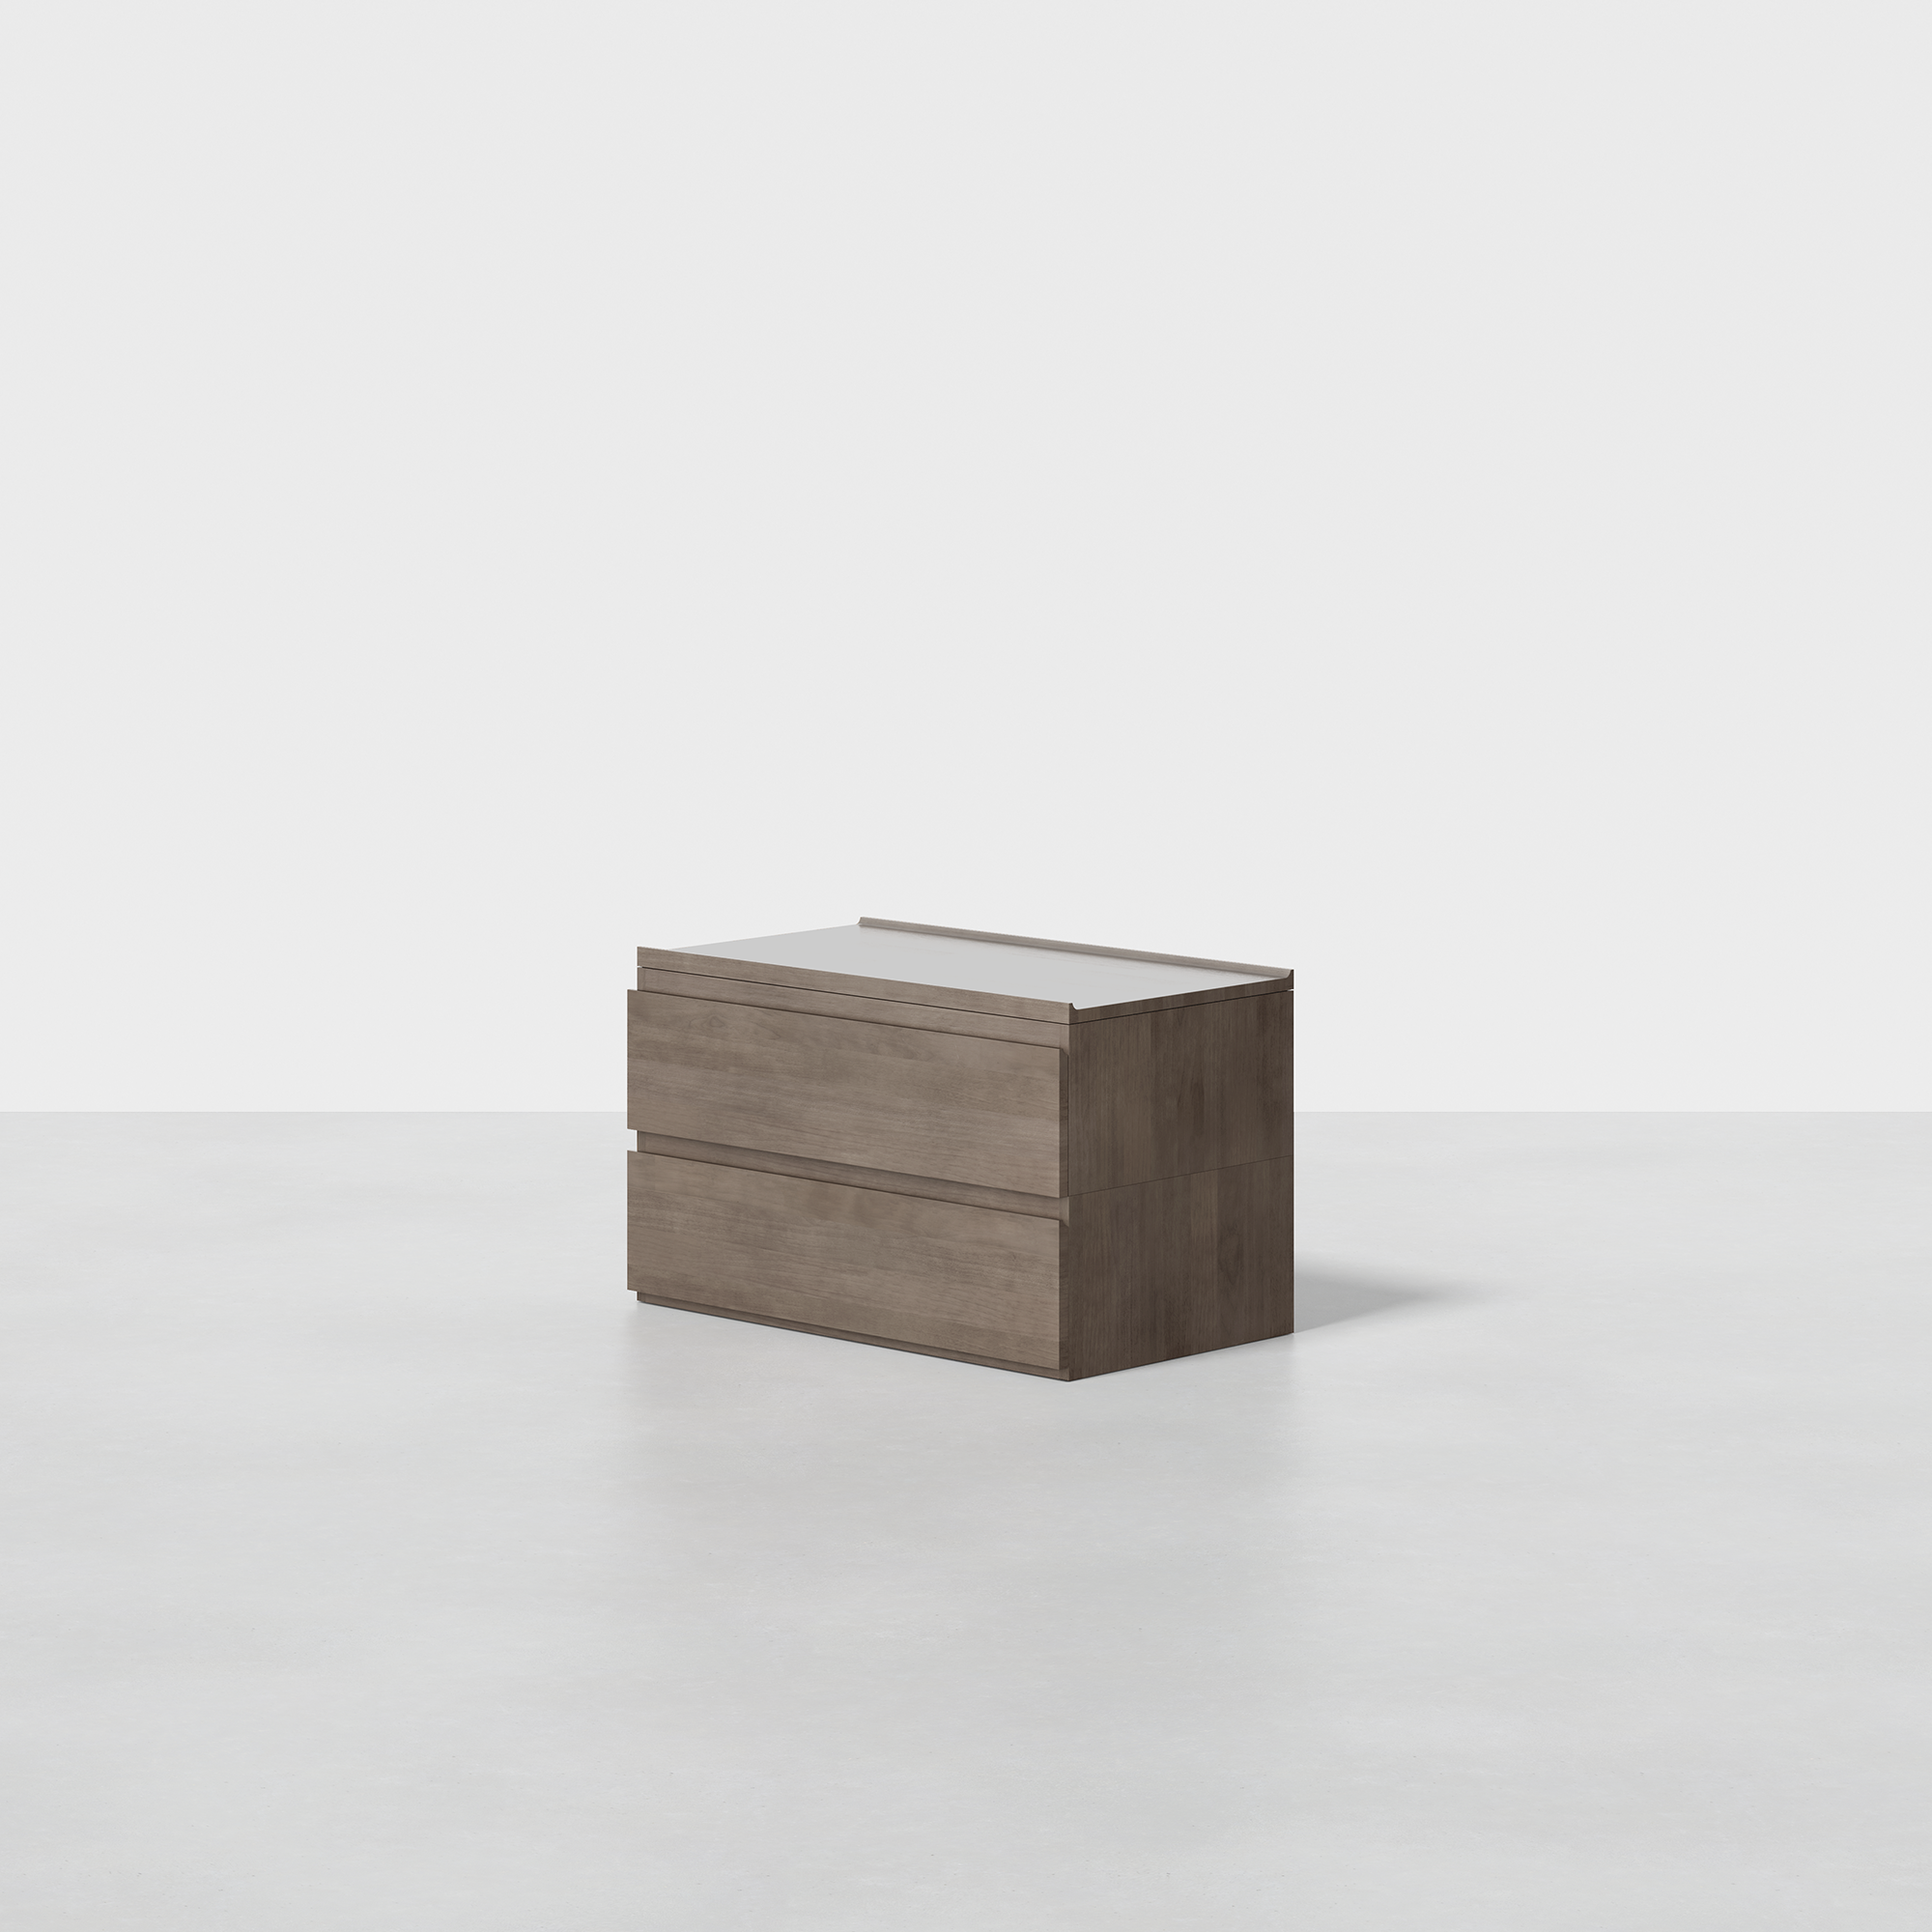 PDP Image: The Dresser (2x1 - Grey) - Render - Angled 